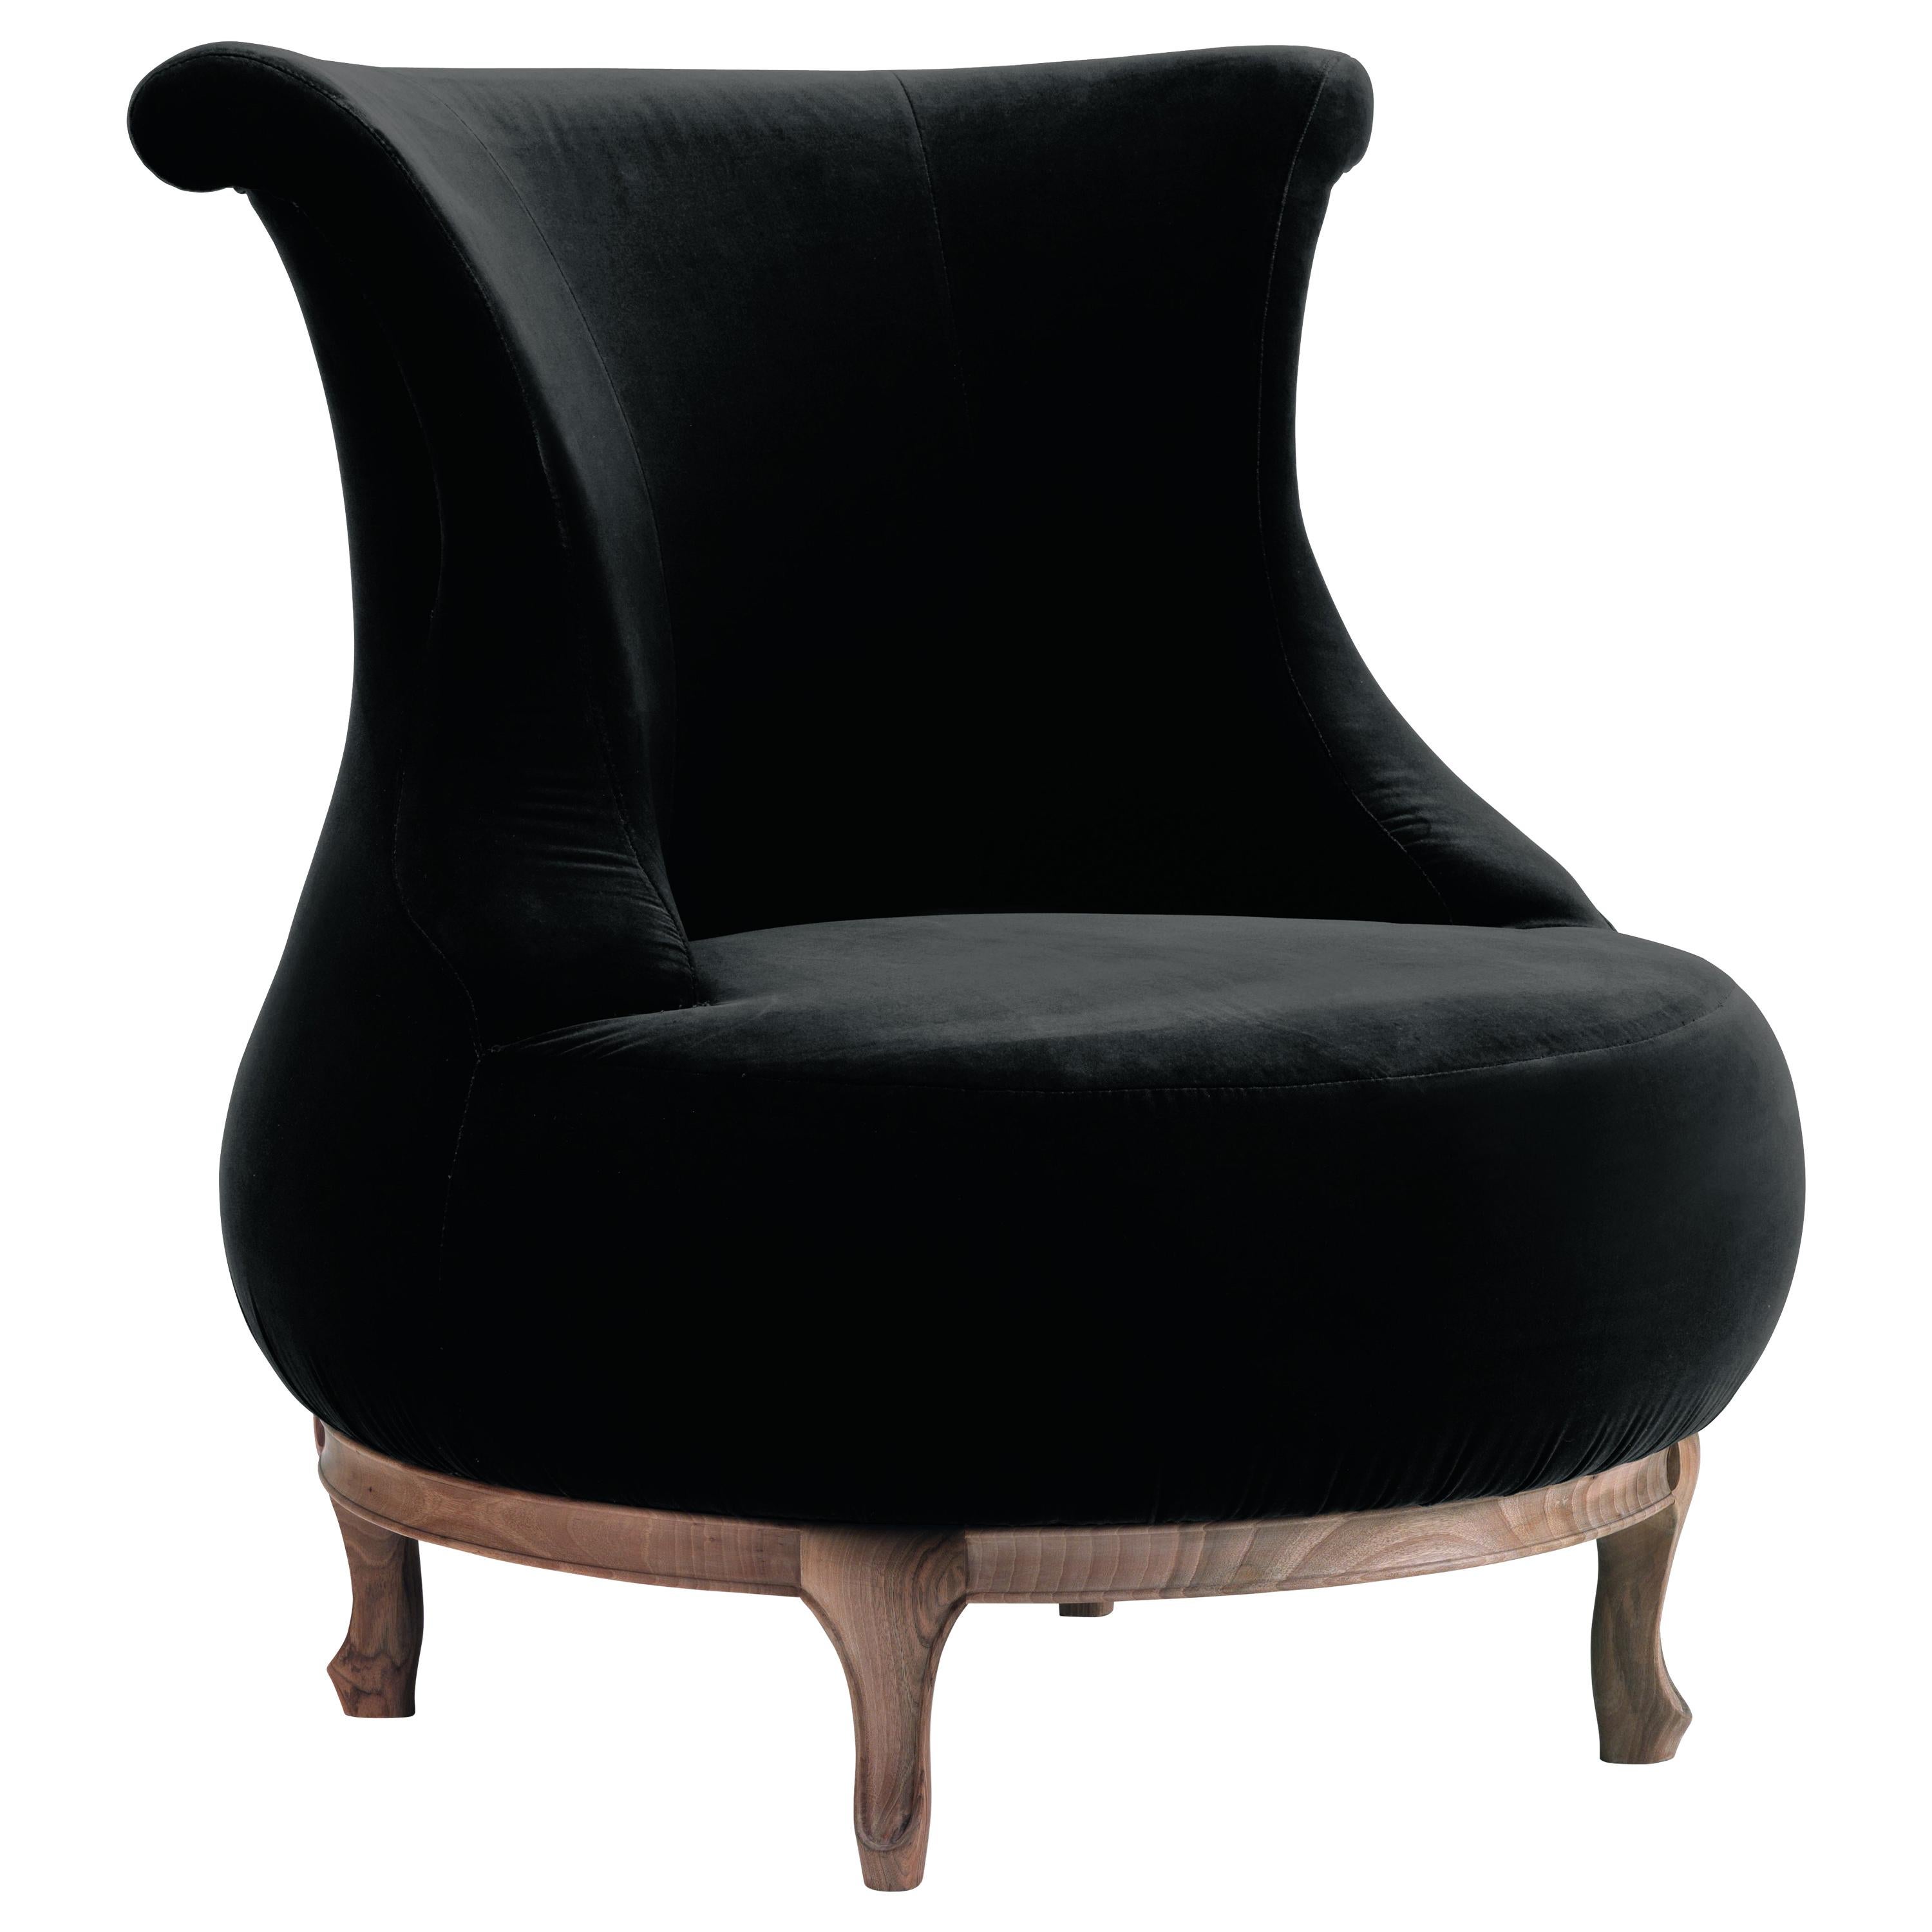 PLUMP/A Black Velvet Armchair in Solid Walnut Wood Frame  